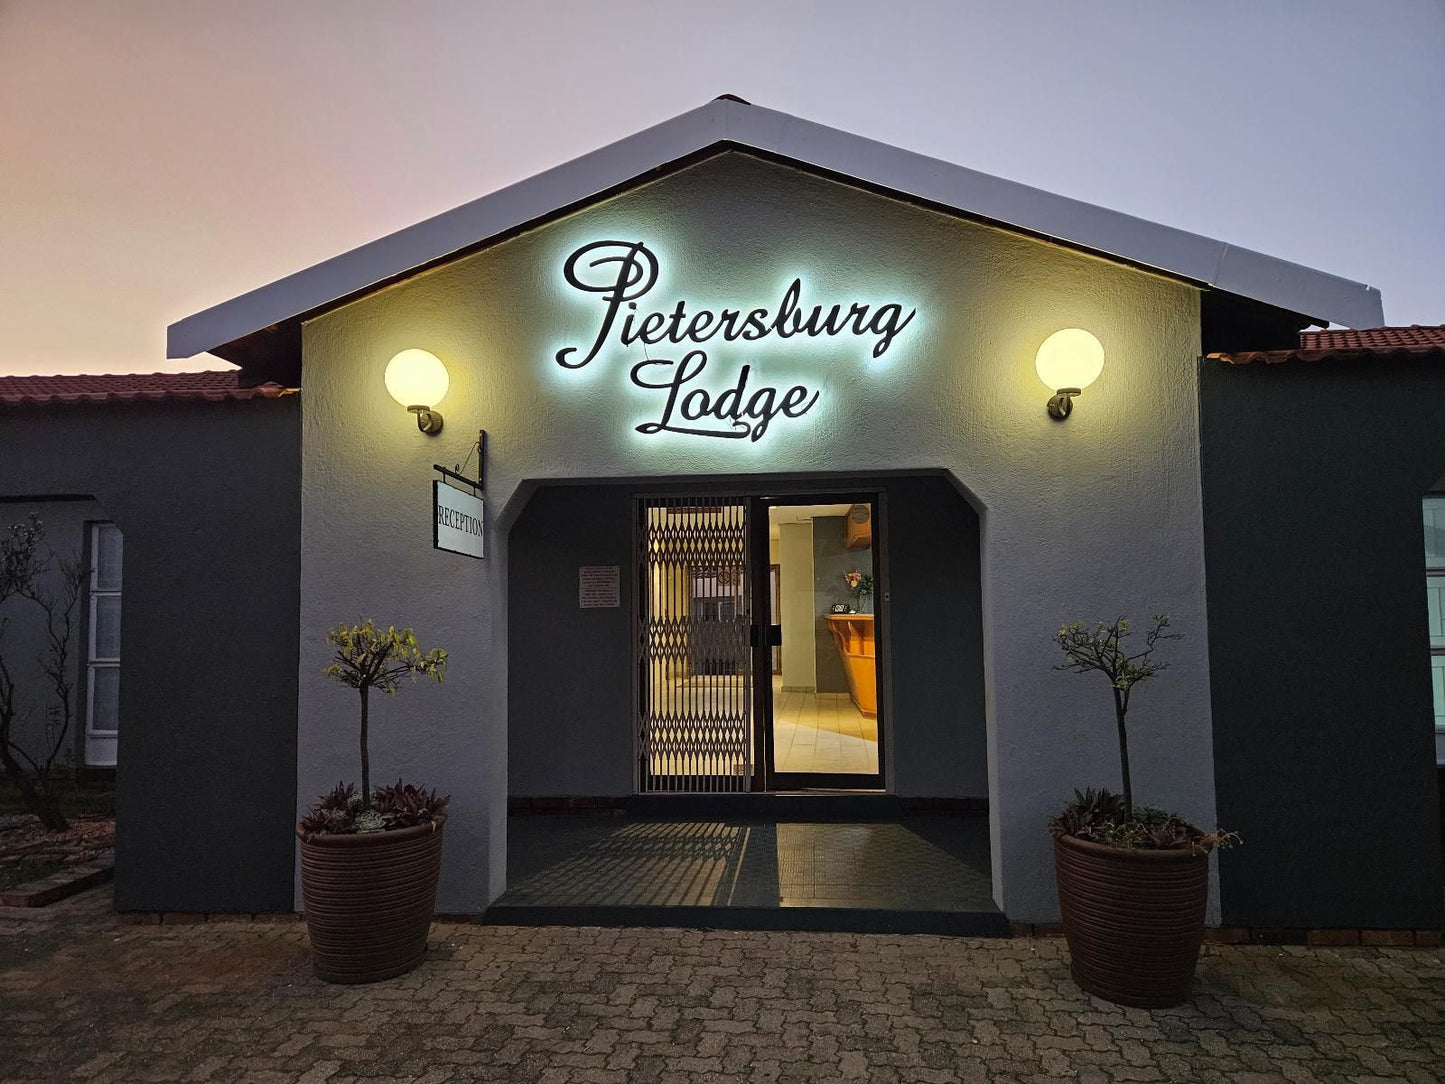 Pietersburg Lodge Mypark Polokwane Pietersburg Limpopo Province South Africa Restaurant, Bar